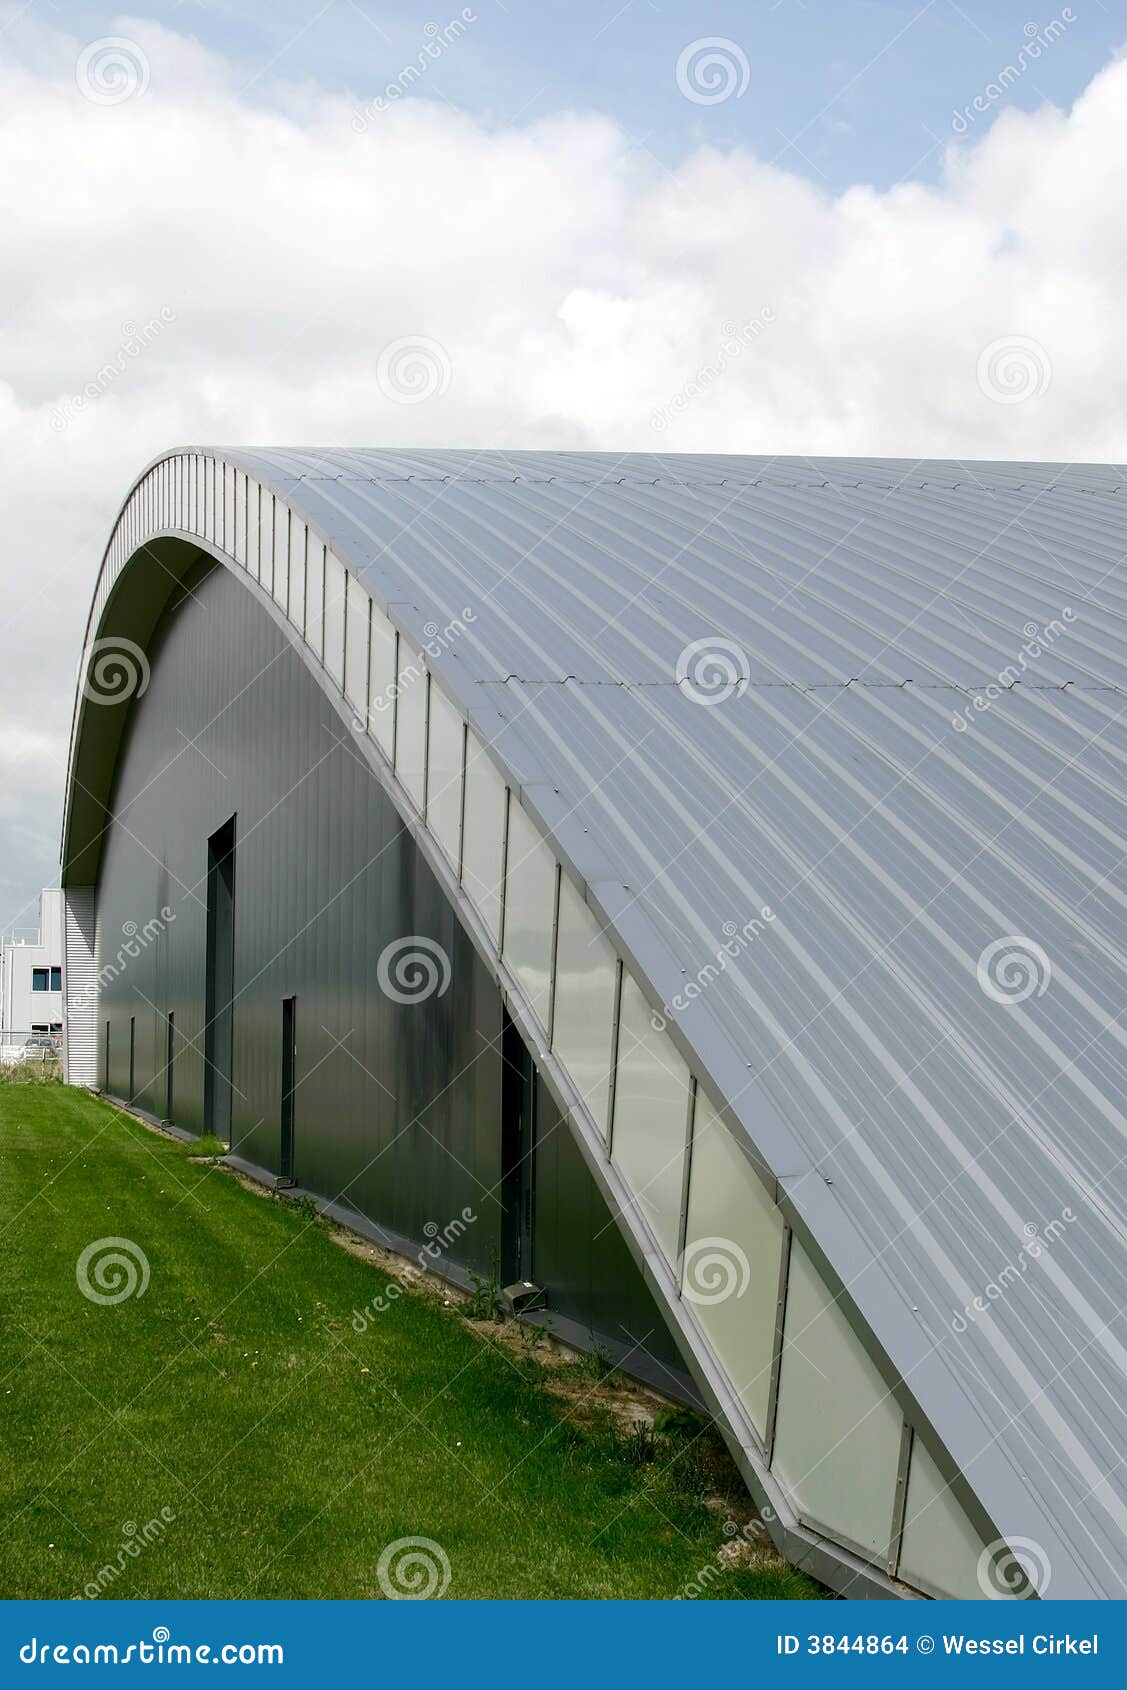 dutch hangar